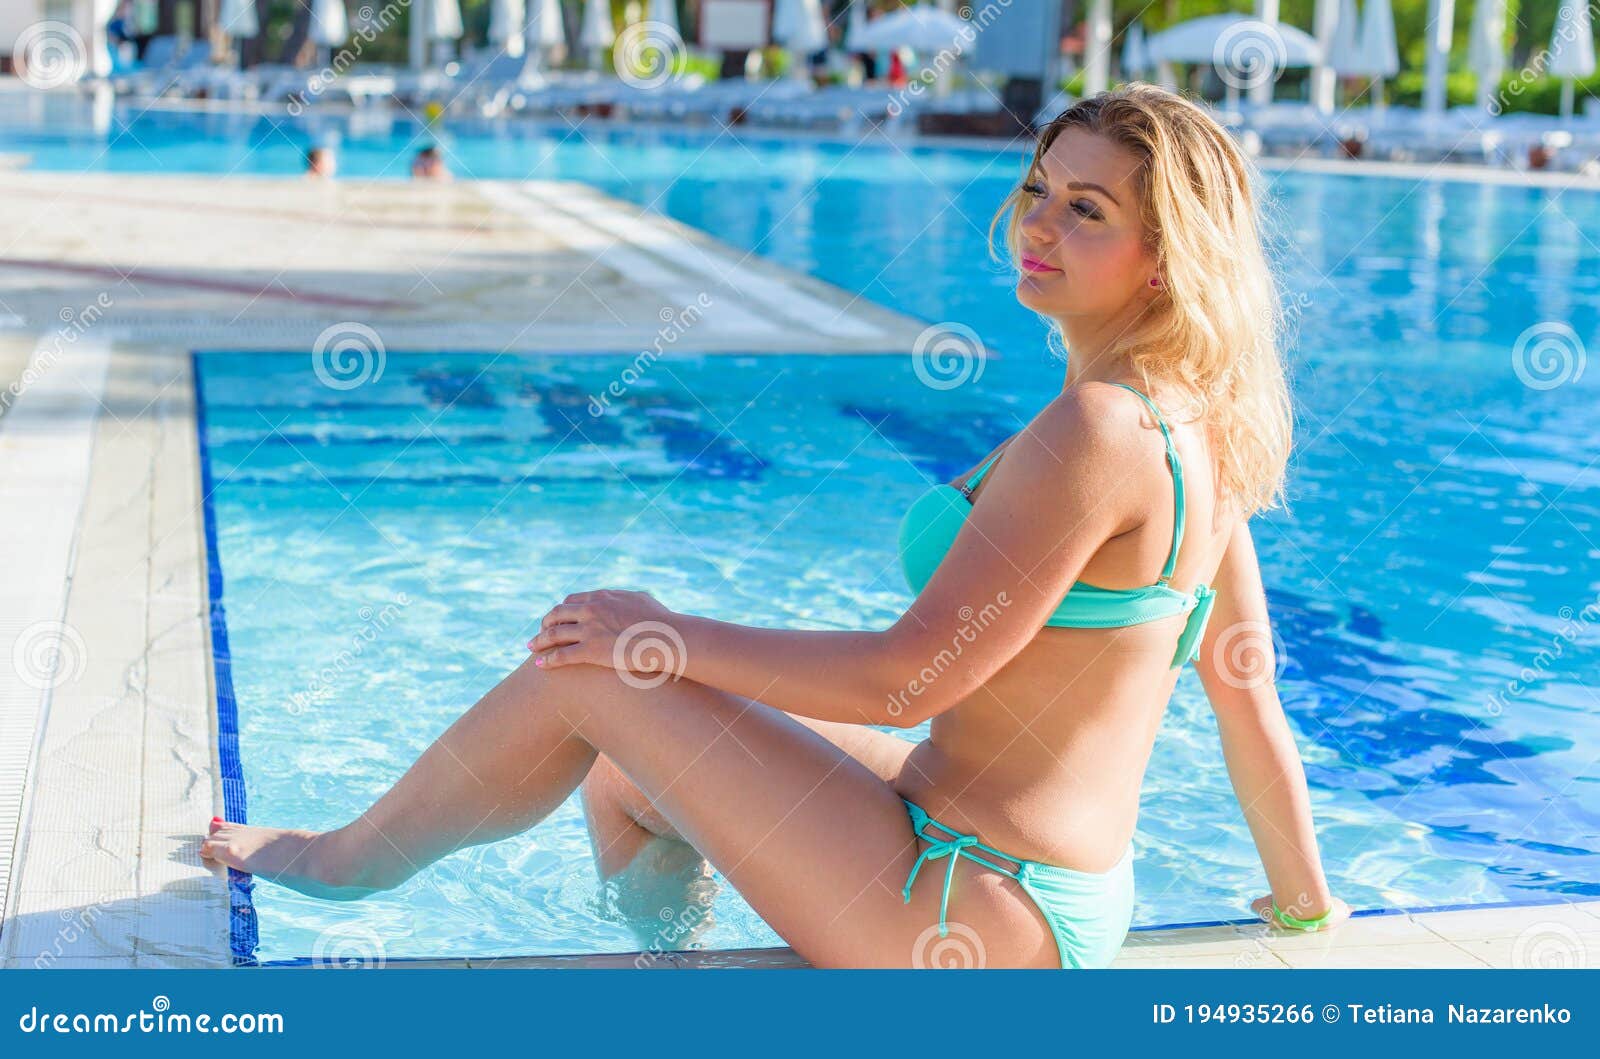 Busty Amateur Pool Bikini